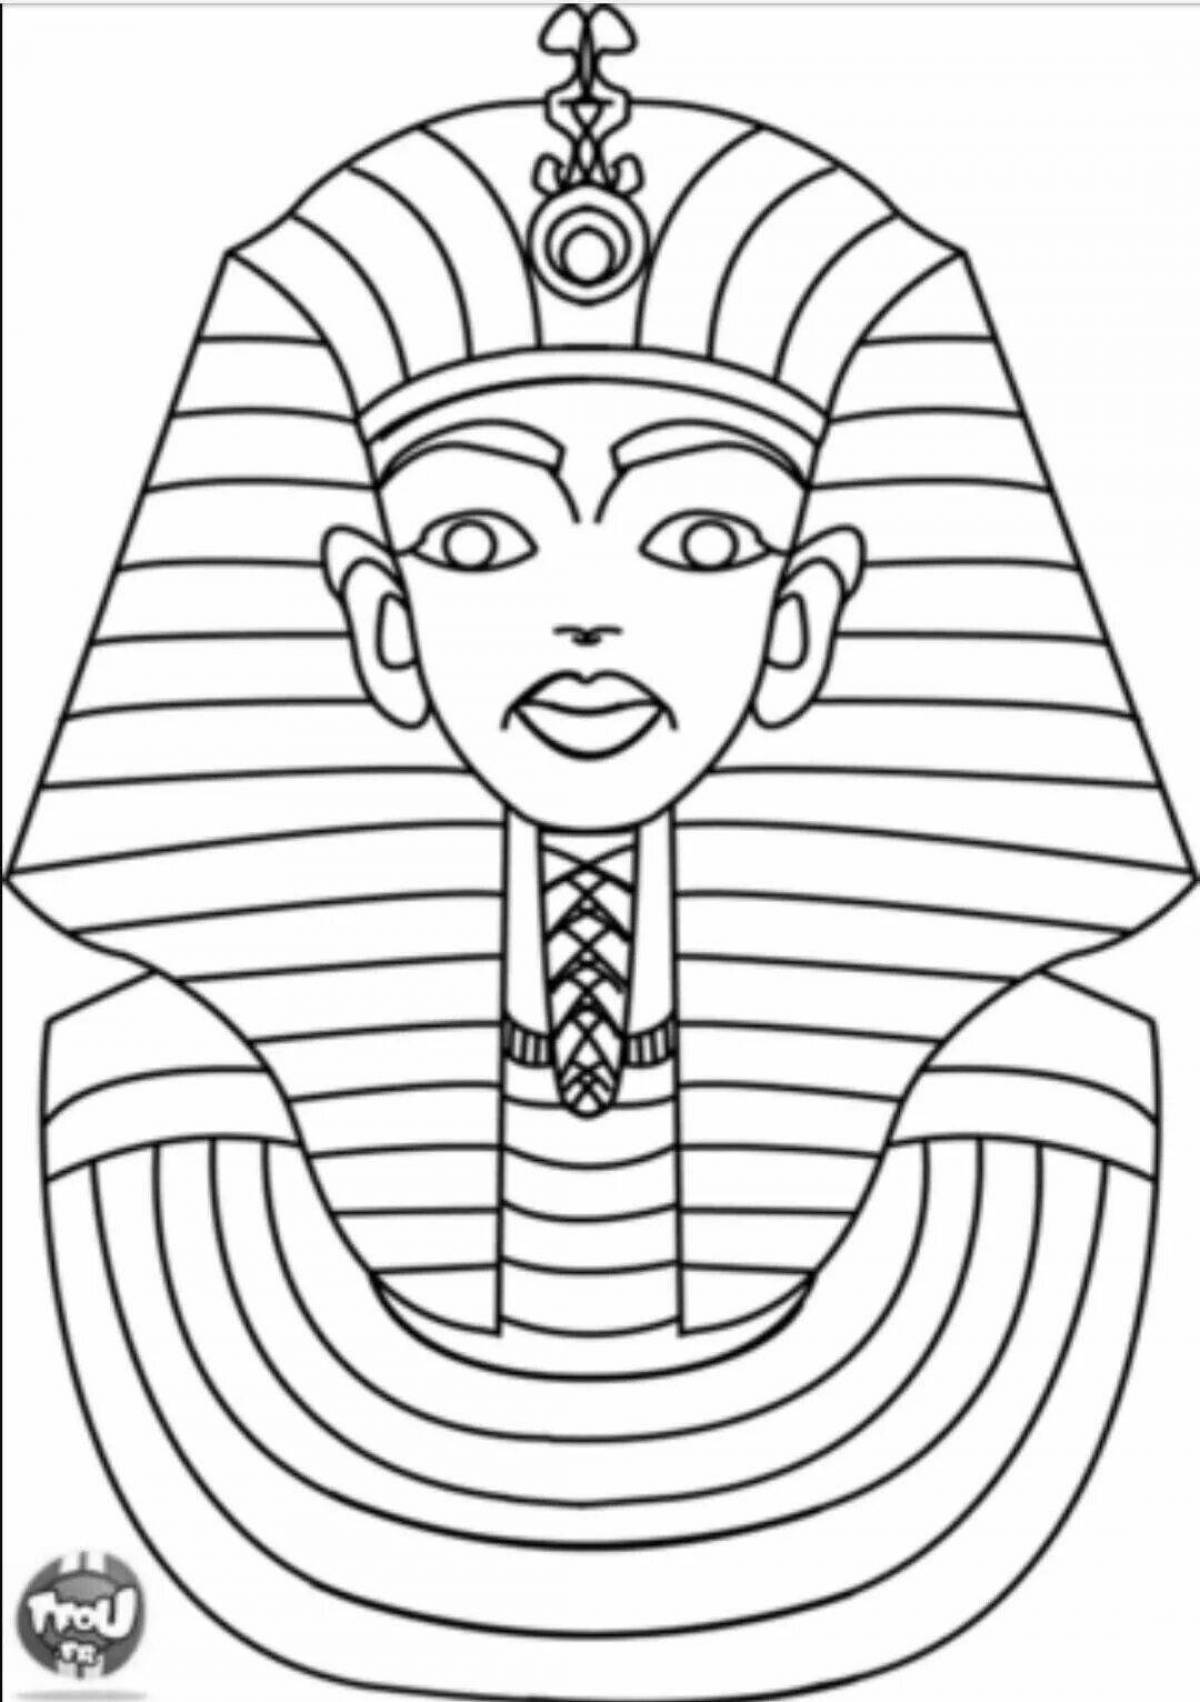 Маска фараона рисунок 5. Маска фараона Тутанхамона изо 5. Маска фараона Тутанхамона рисунок. Фараон Египта Тутанхамон эскиз. Древний Египет маска фараона.